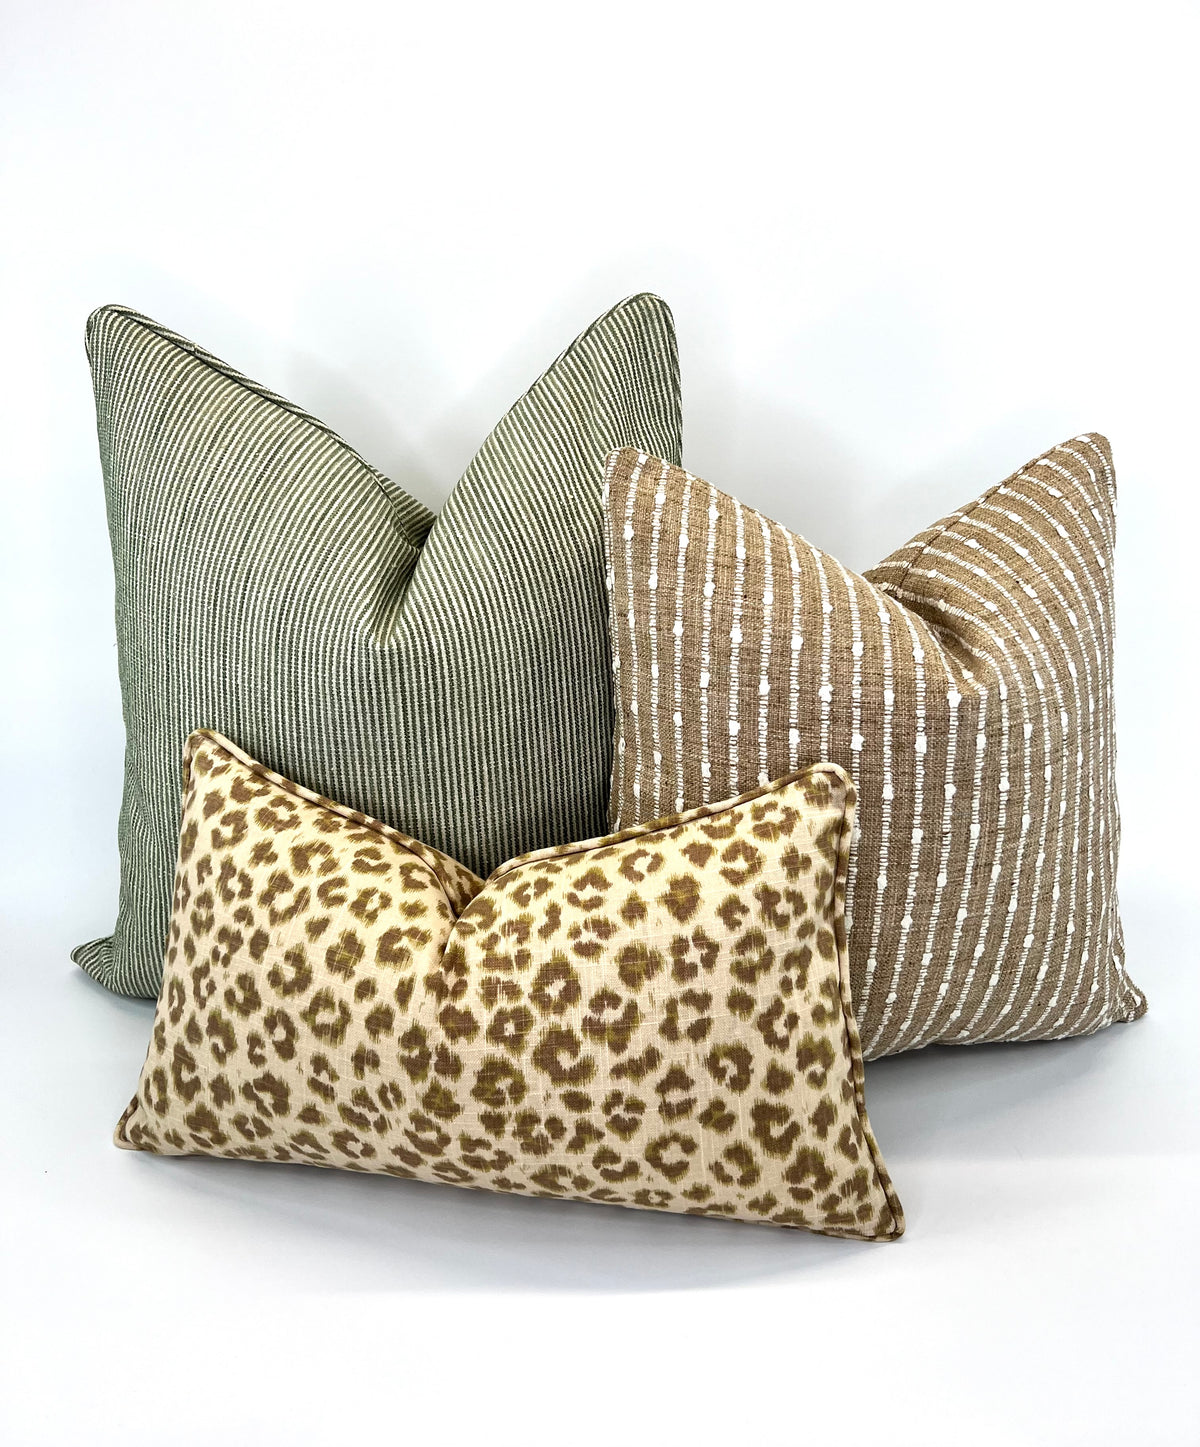 Decorative Pillow Cover in Deja Vu Harvest